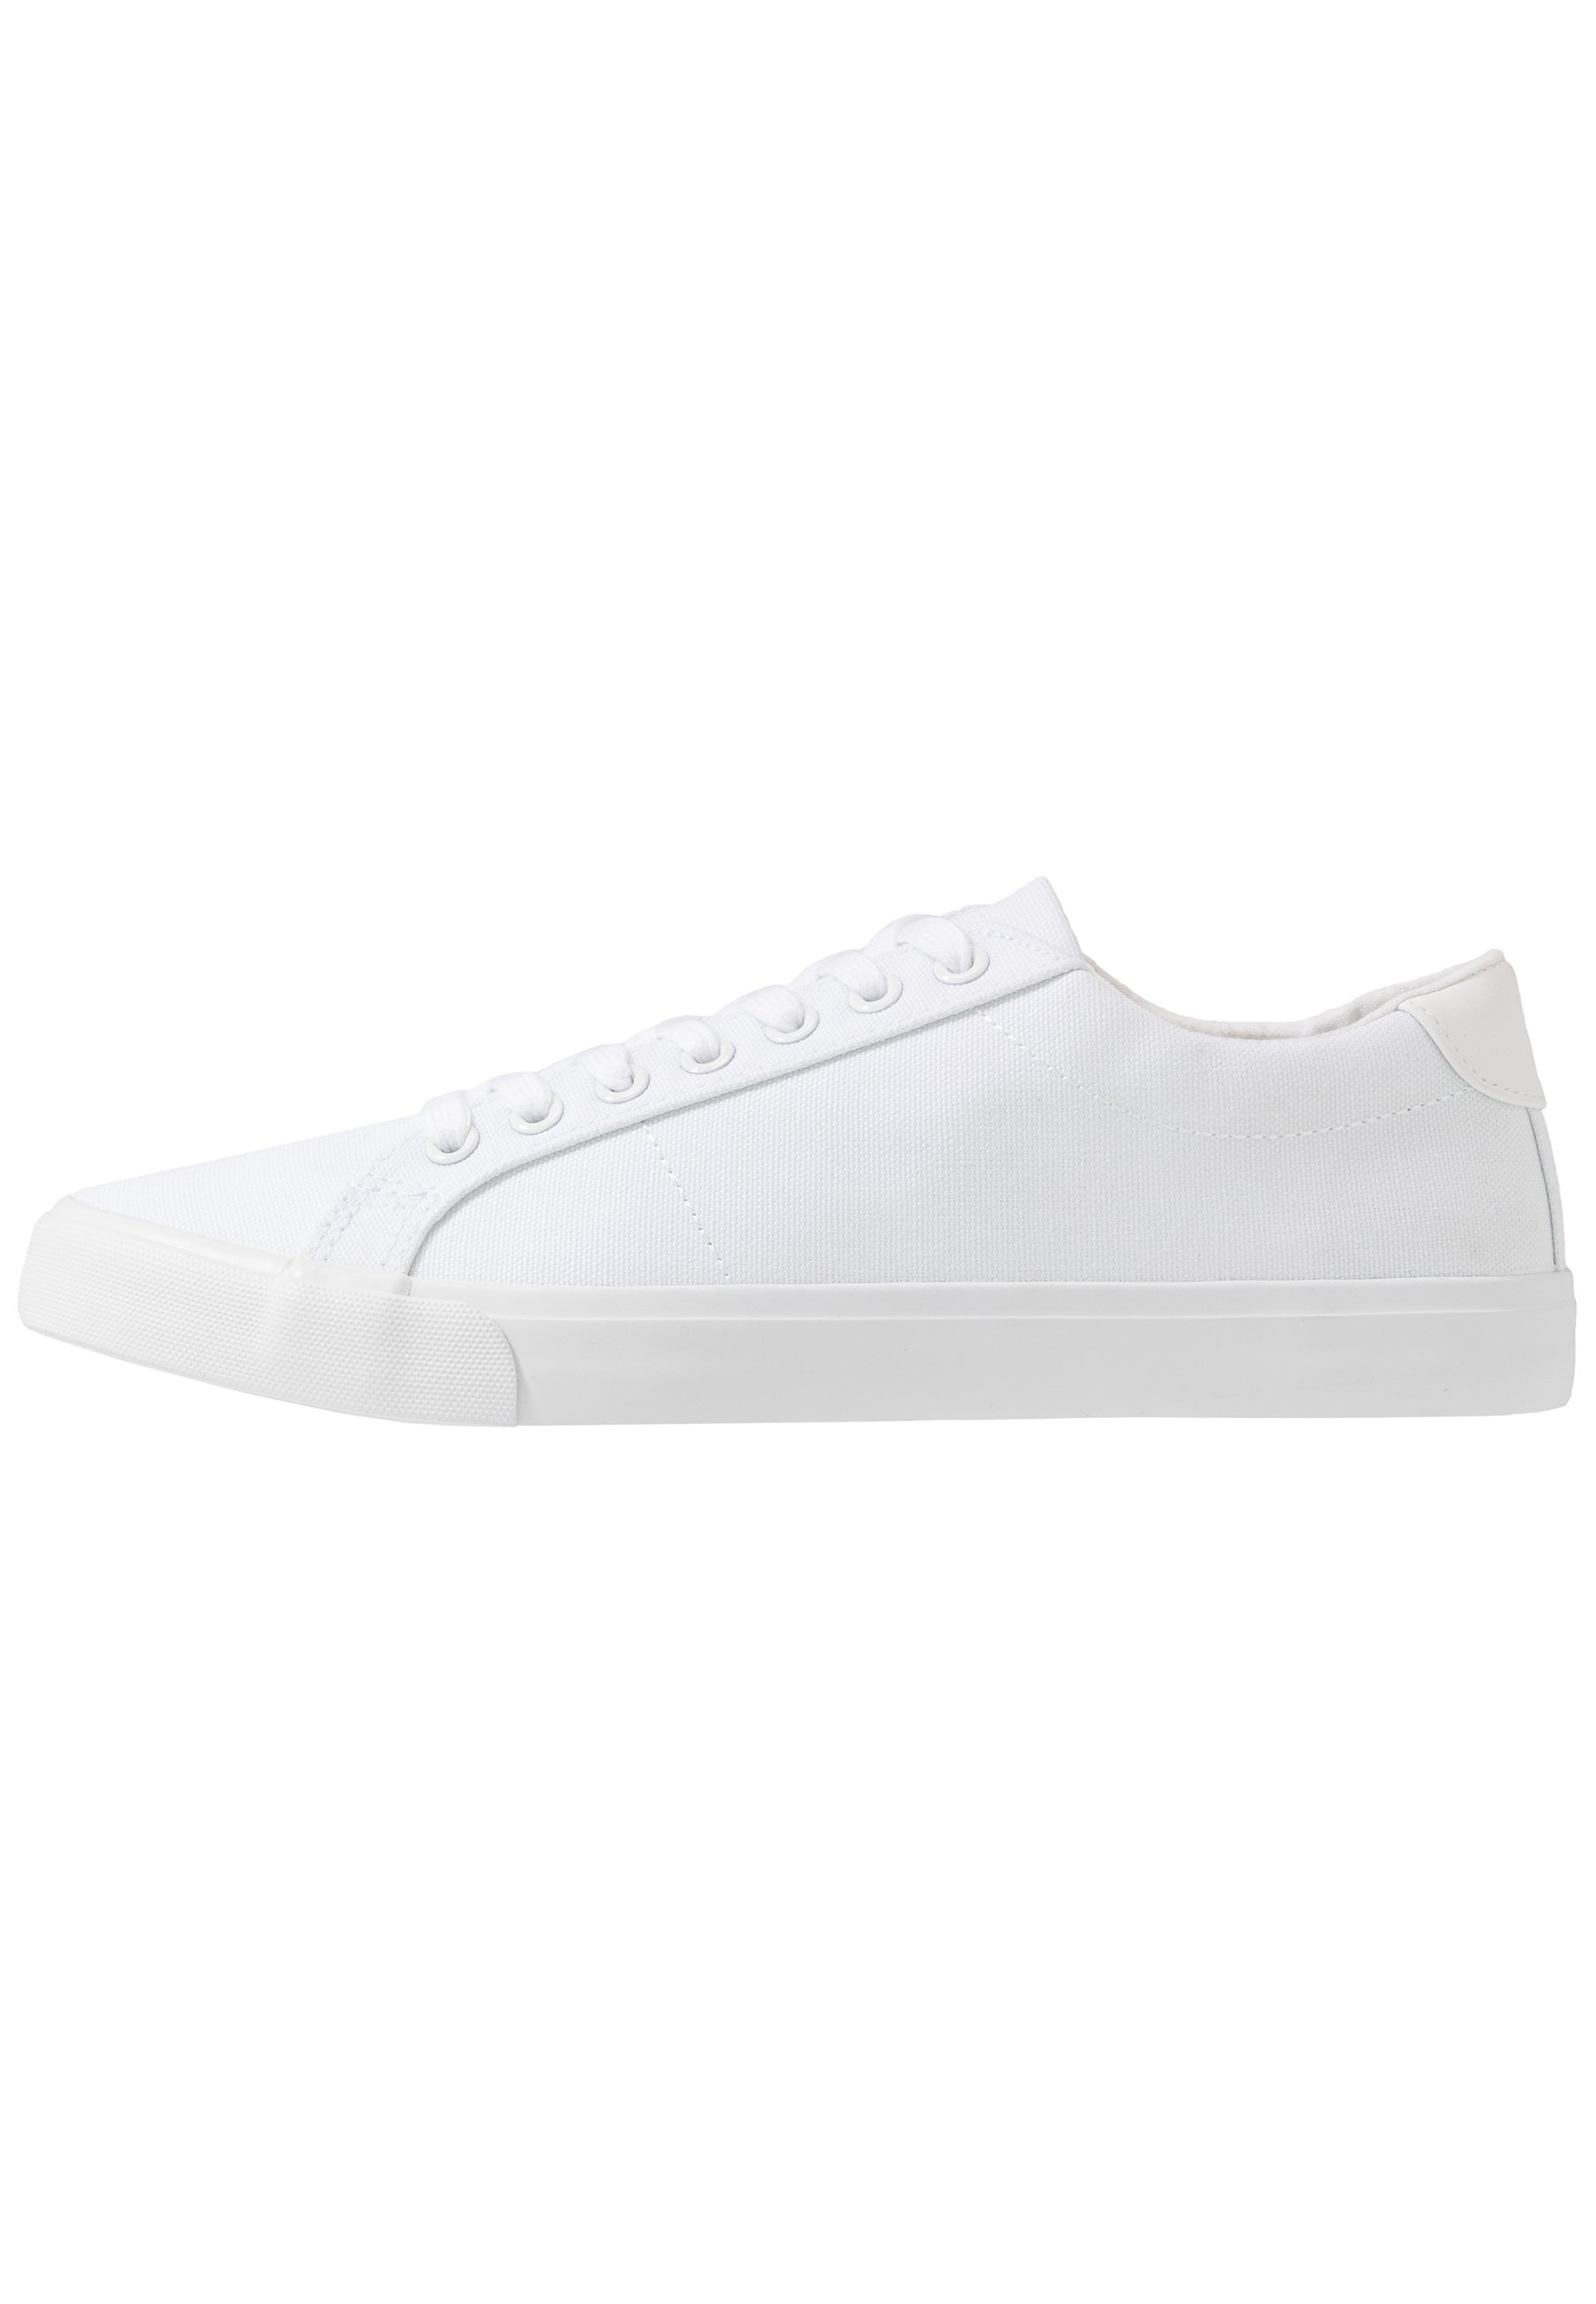 Pier One UNISEX - Sneaker low - white/weiß